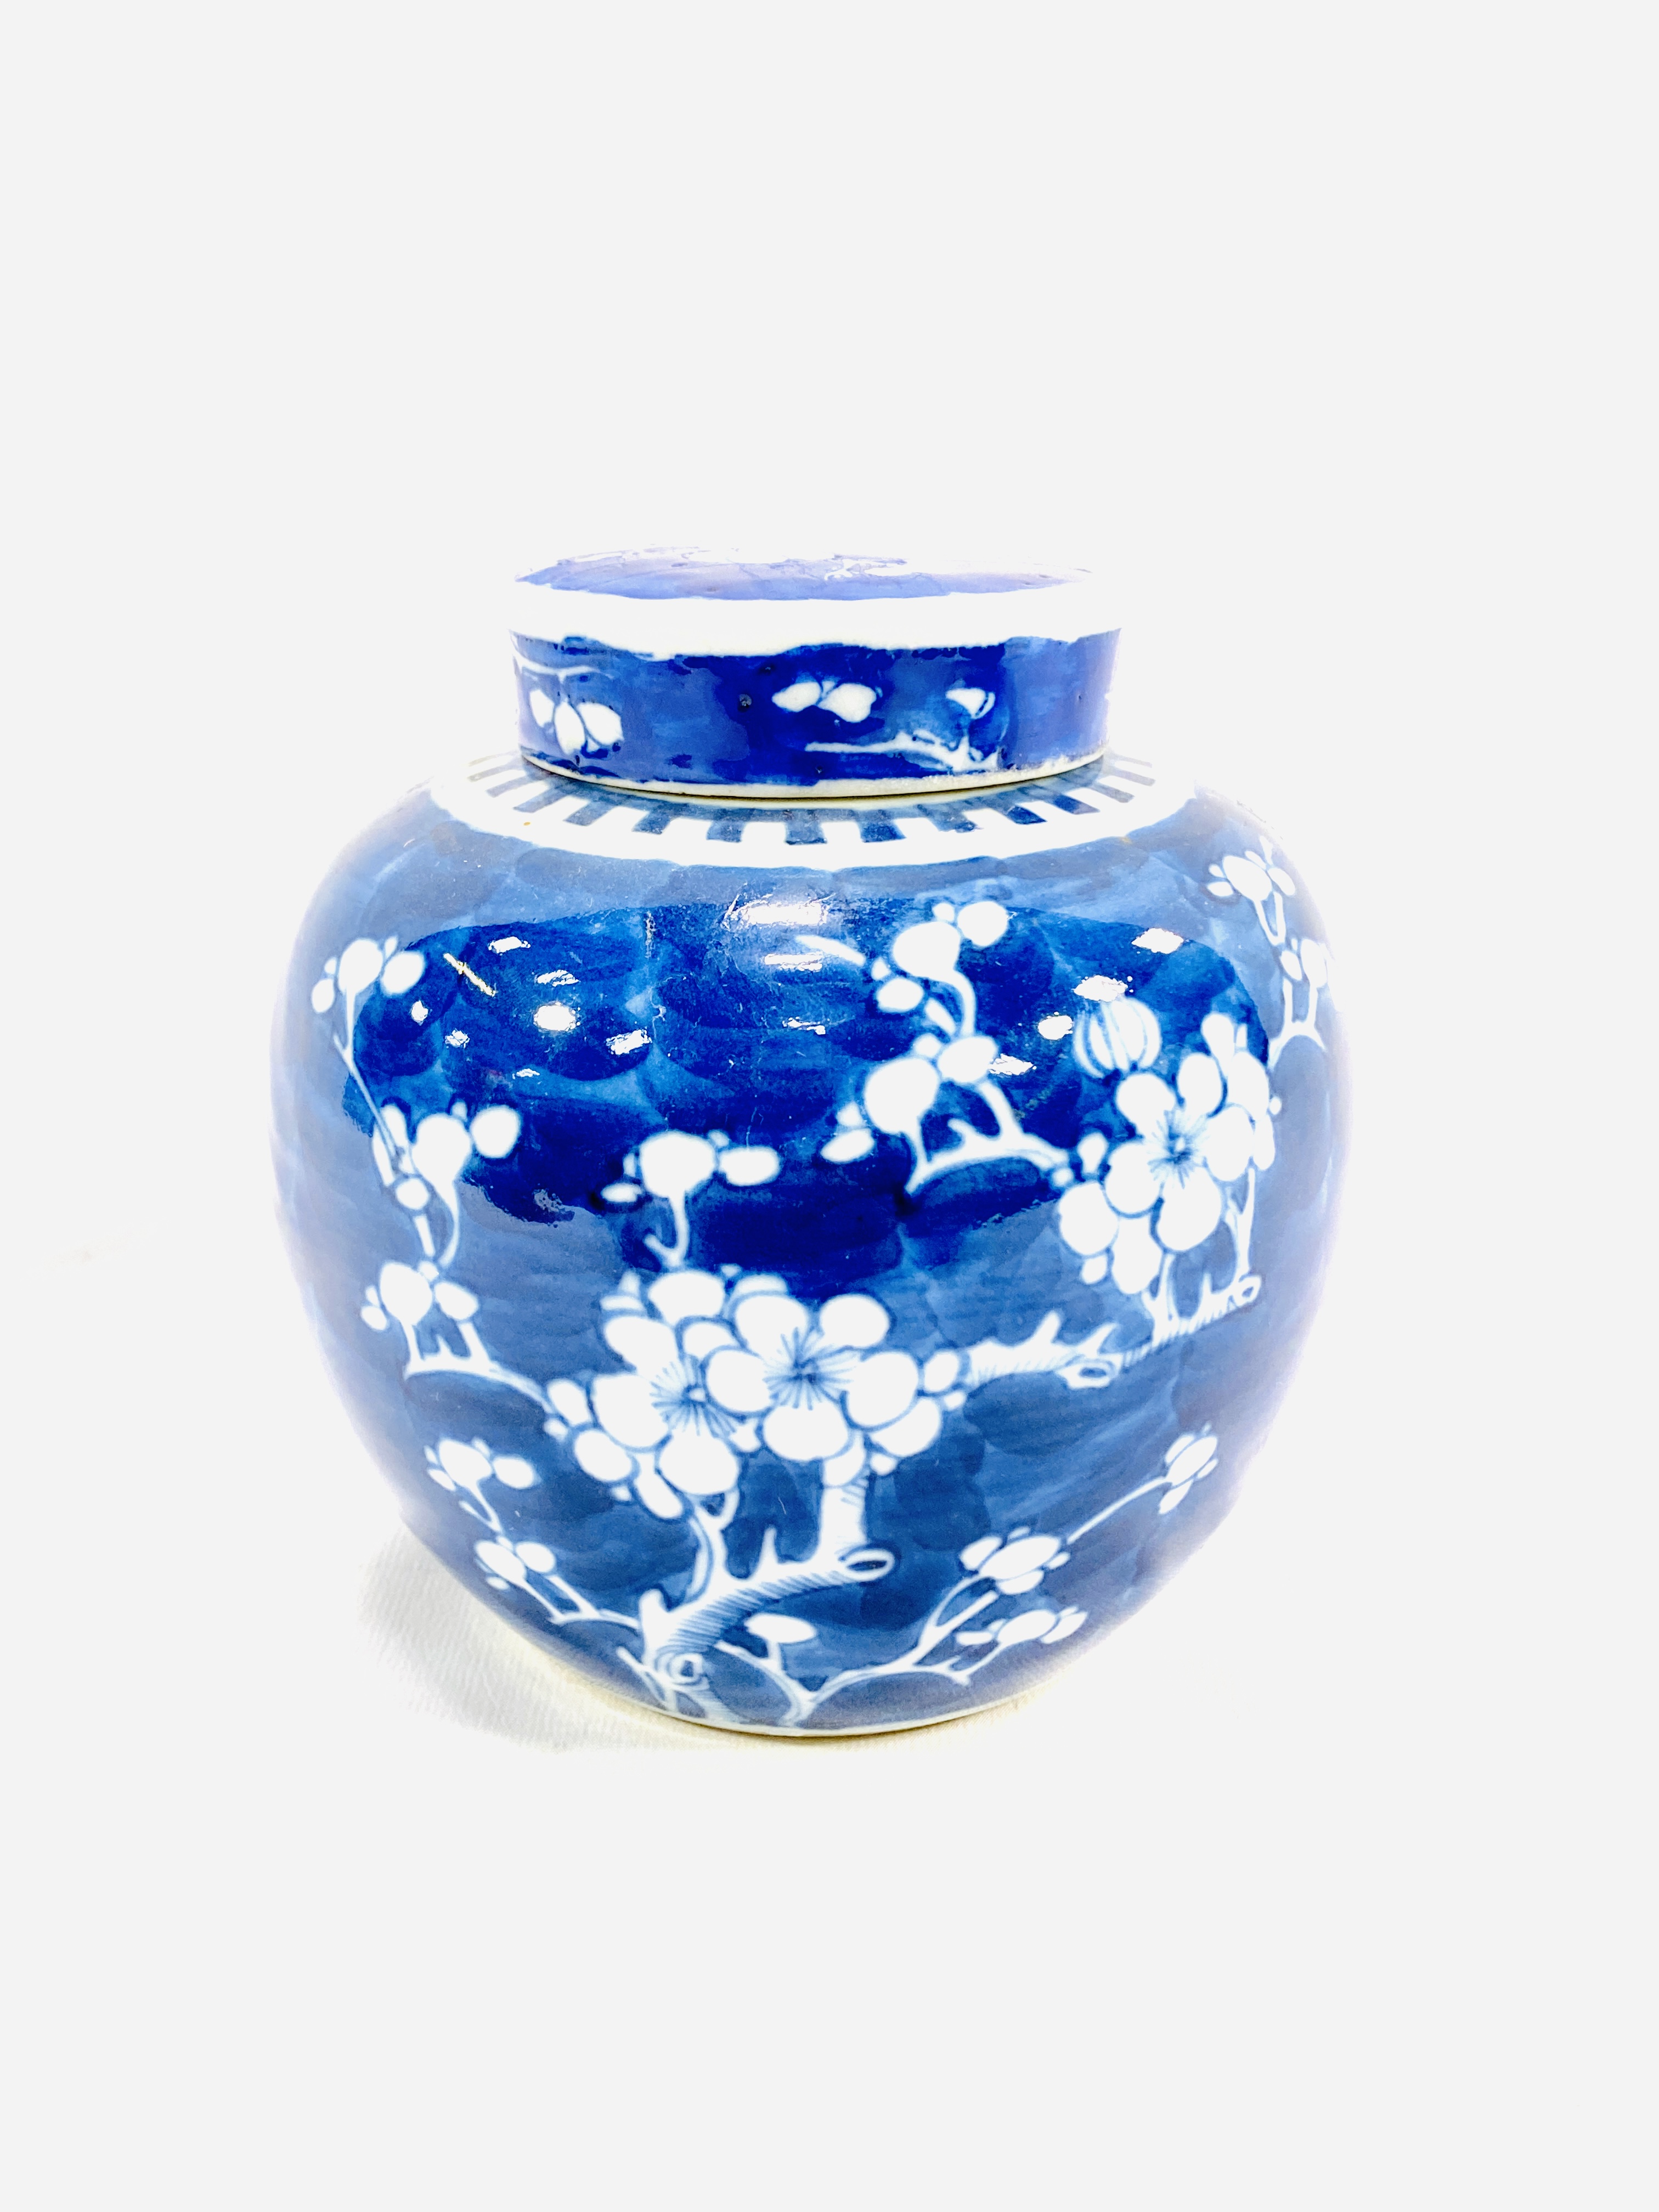 Oriental bowl and ginger jar - Image 5 of 17